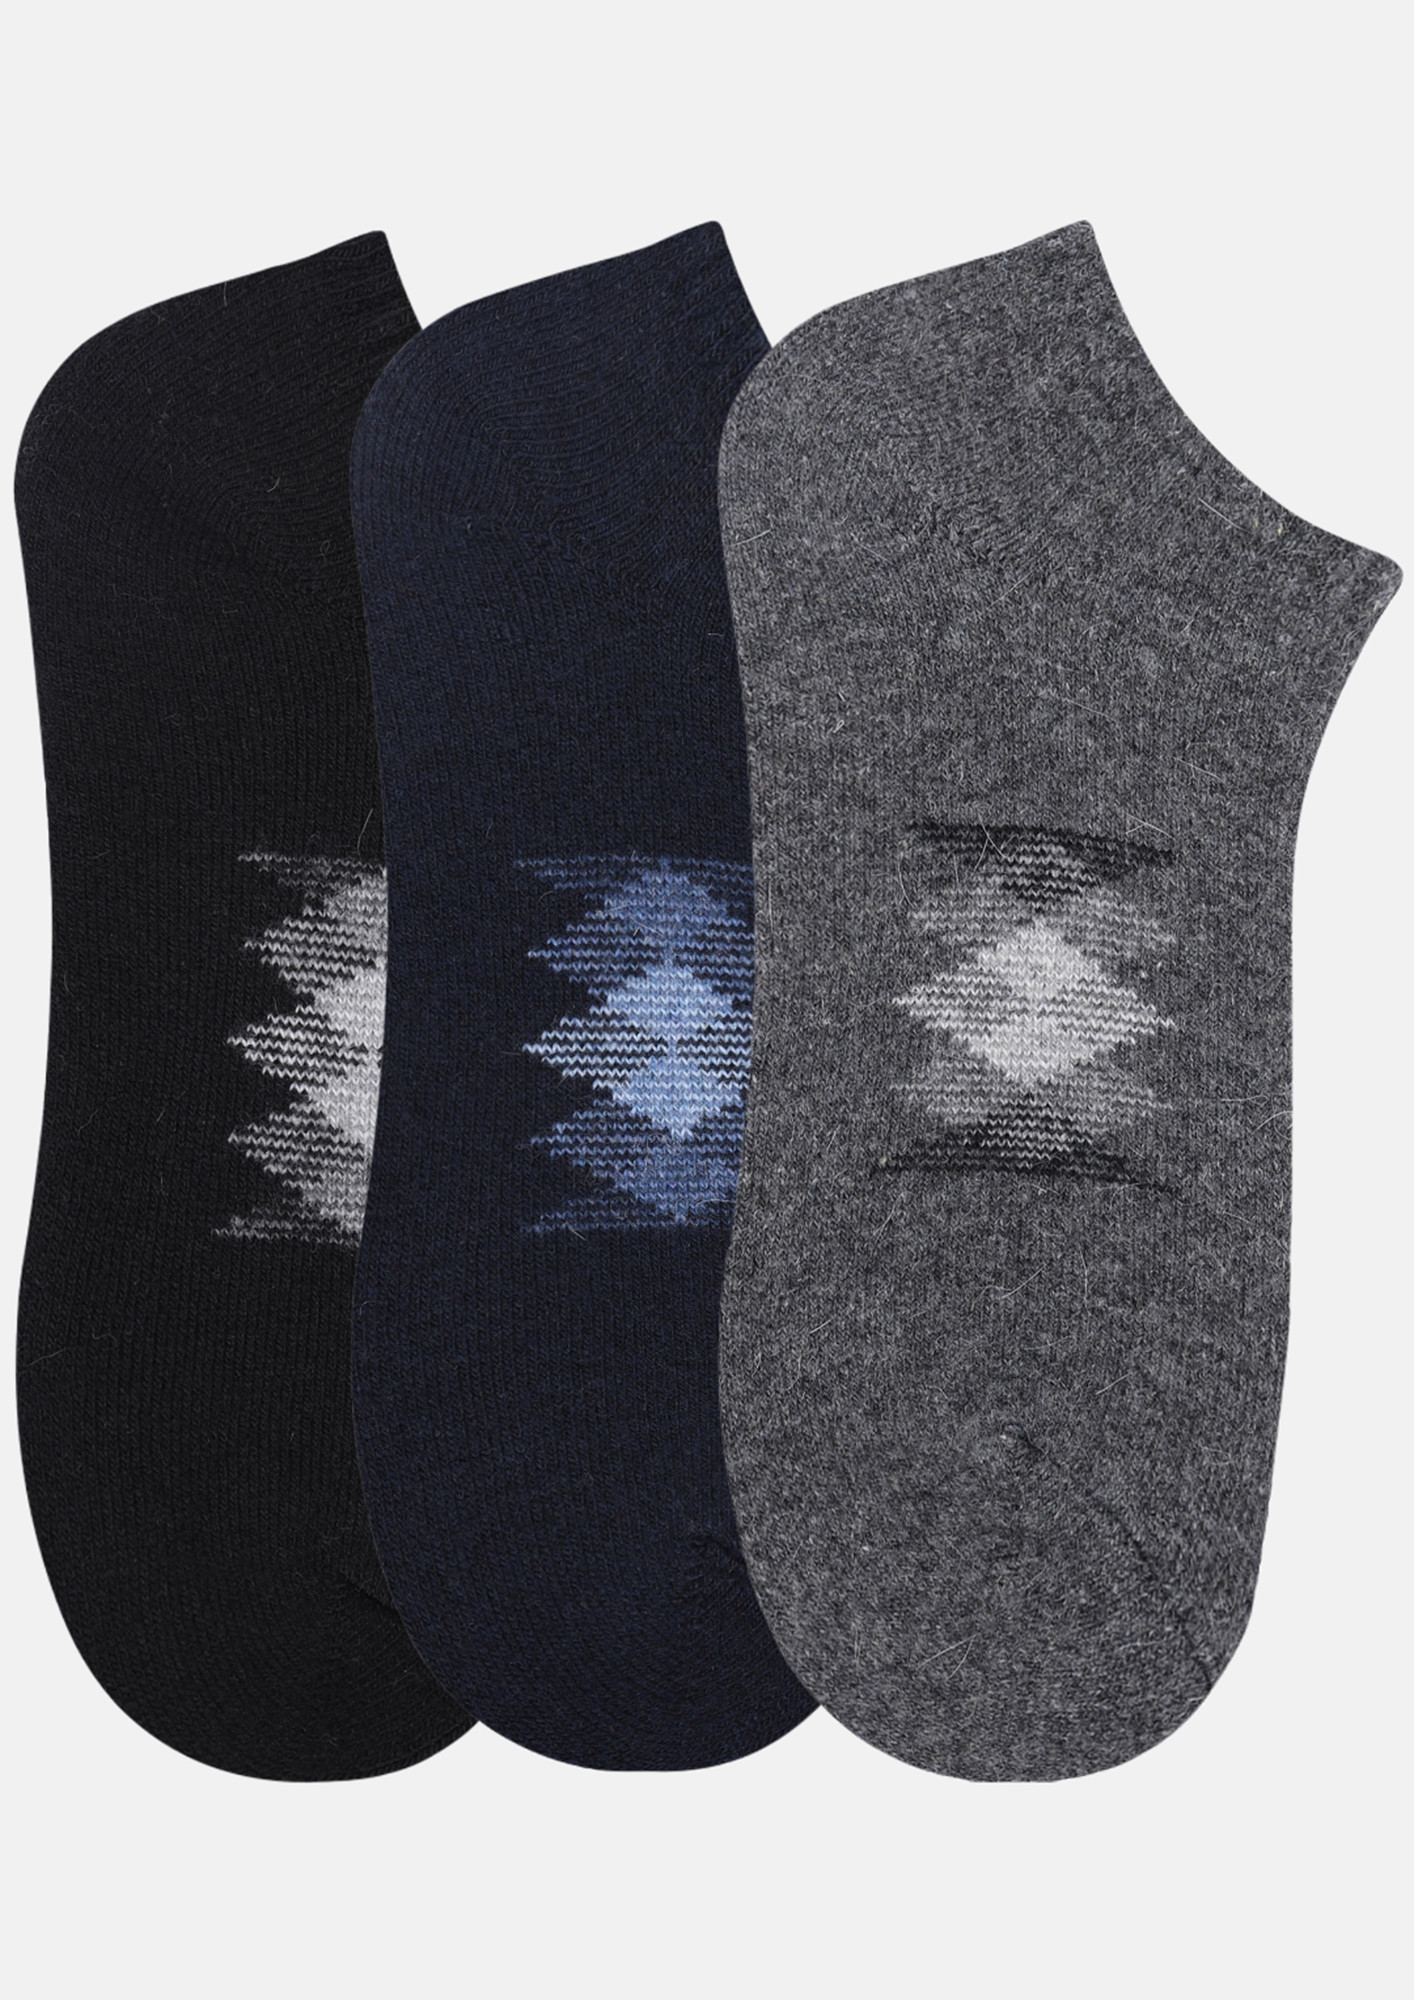 NEXT2SKIN Men Woolen Loafer Socks (Pack of 3) (Black,Navy Blue,Dark Grey) 5929-BNDG